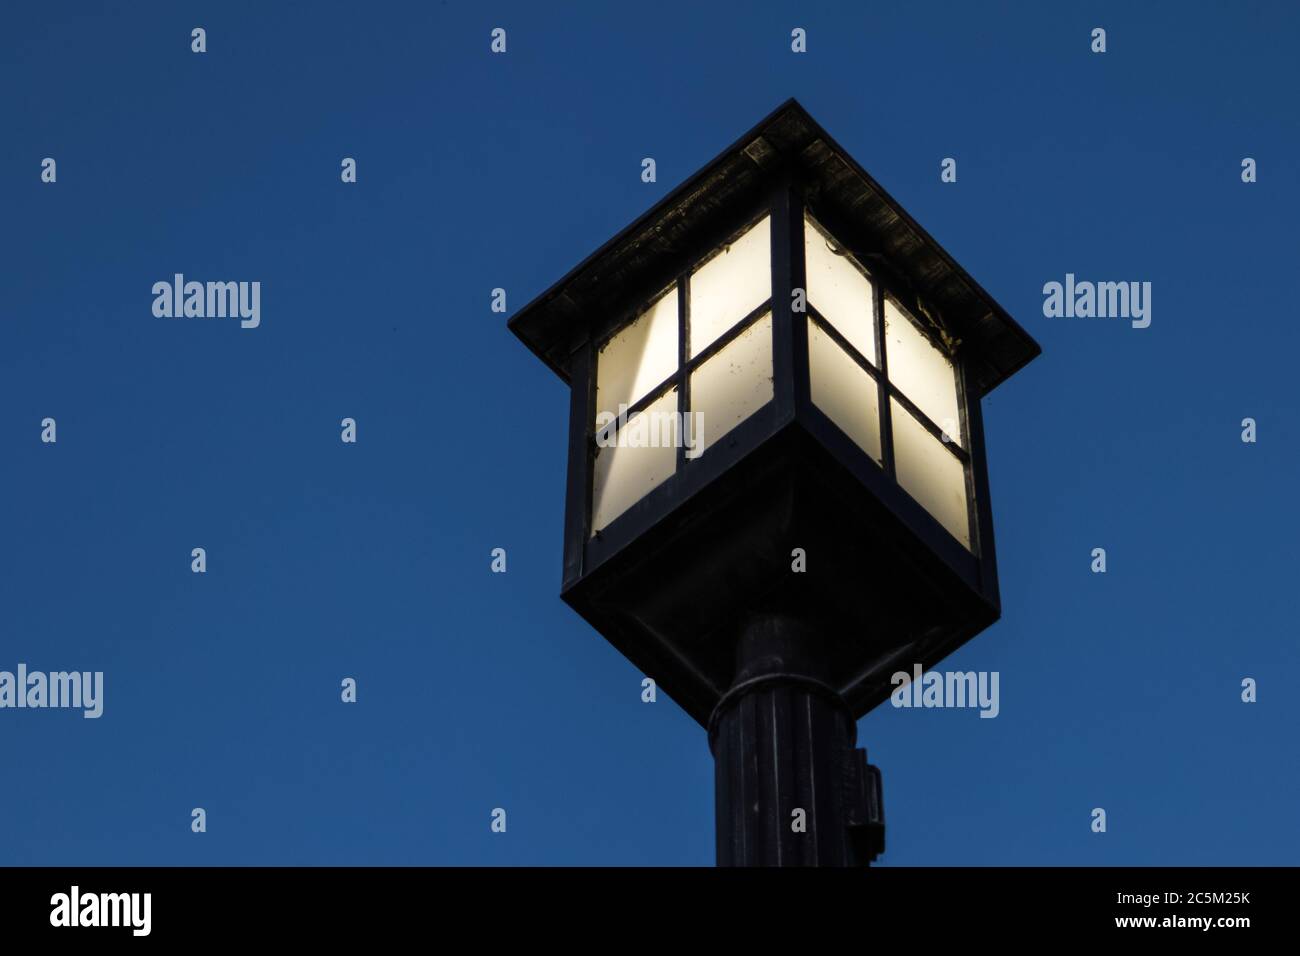 Illuminated Vintage Street Lamp. Black lamp post illuminated with copy space. Stock Photo